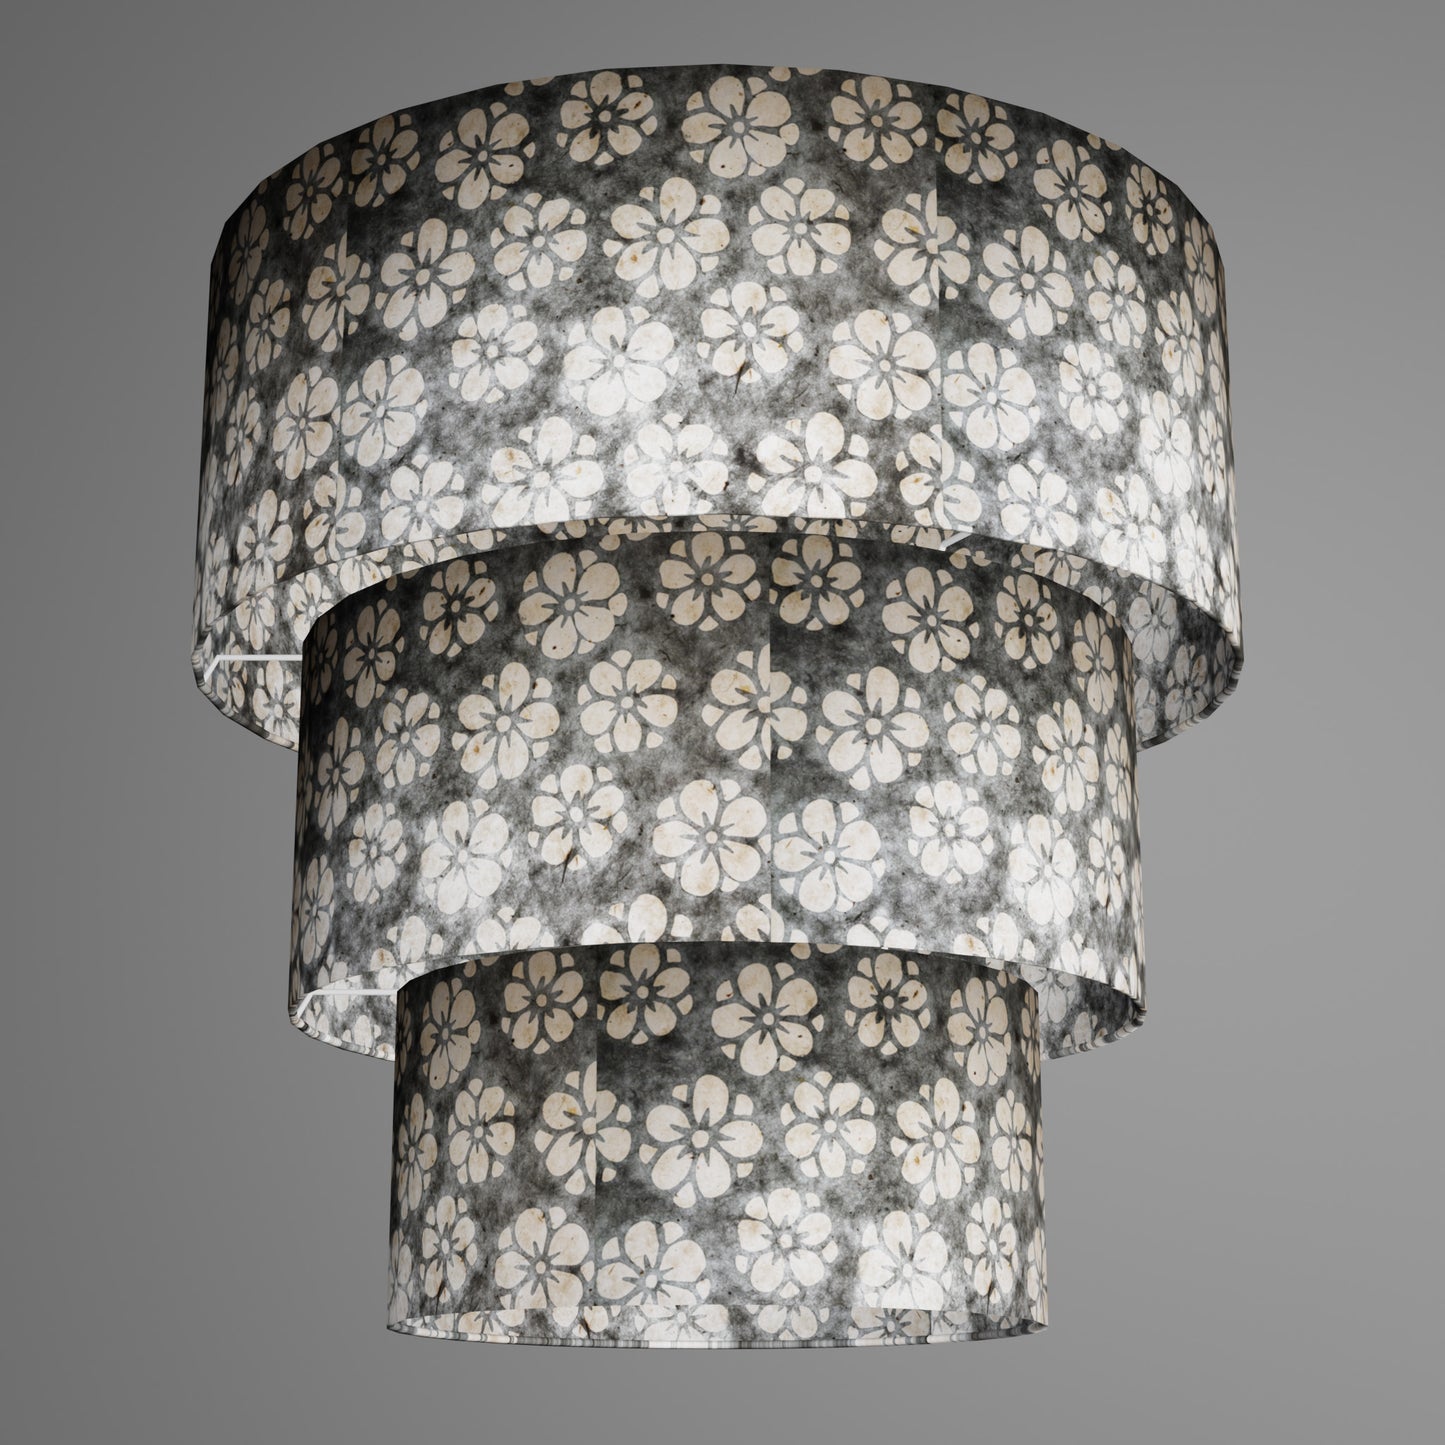 3 Tier Lamp Shade - P77 - Batik Star Flower Grey, 50cm x 20cm, 40cm x 17.5cm & 30cm x 15cm